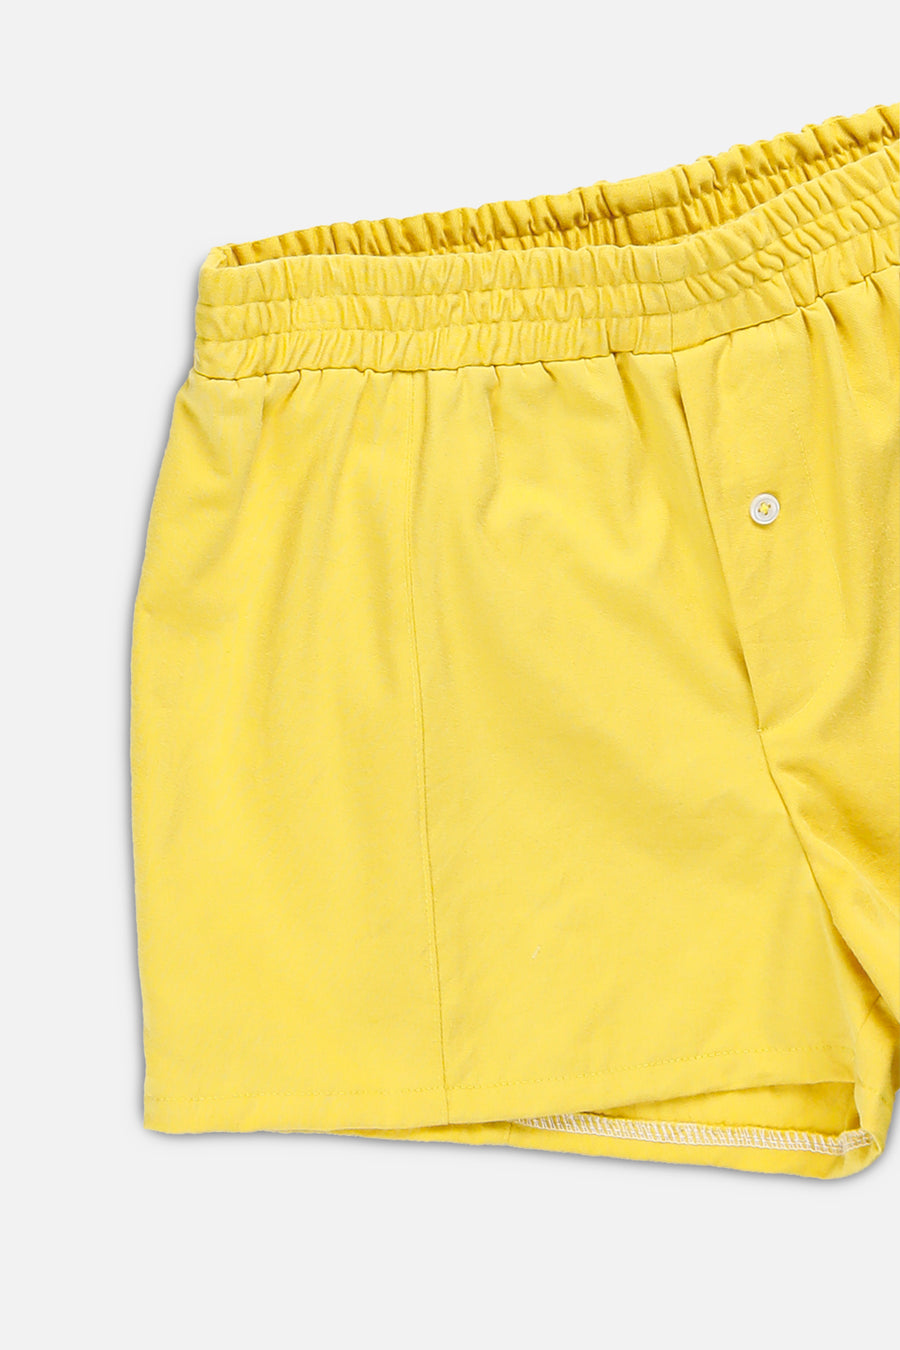 Rework Oxford Mini Boxer Shorts - XS